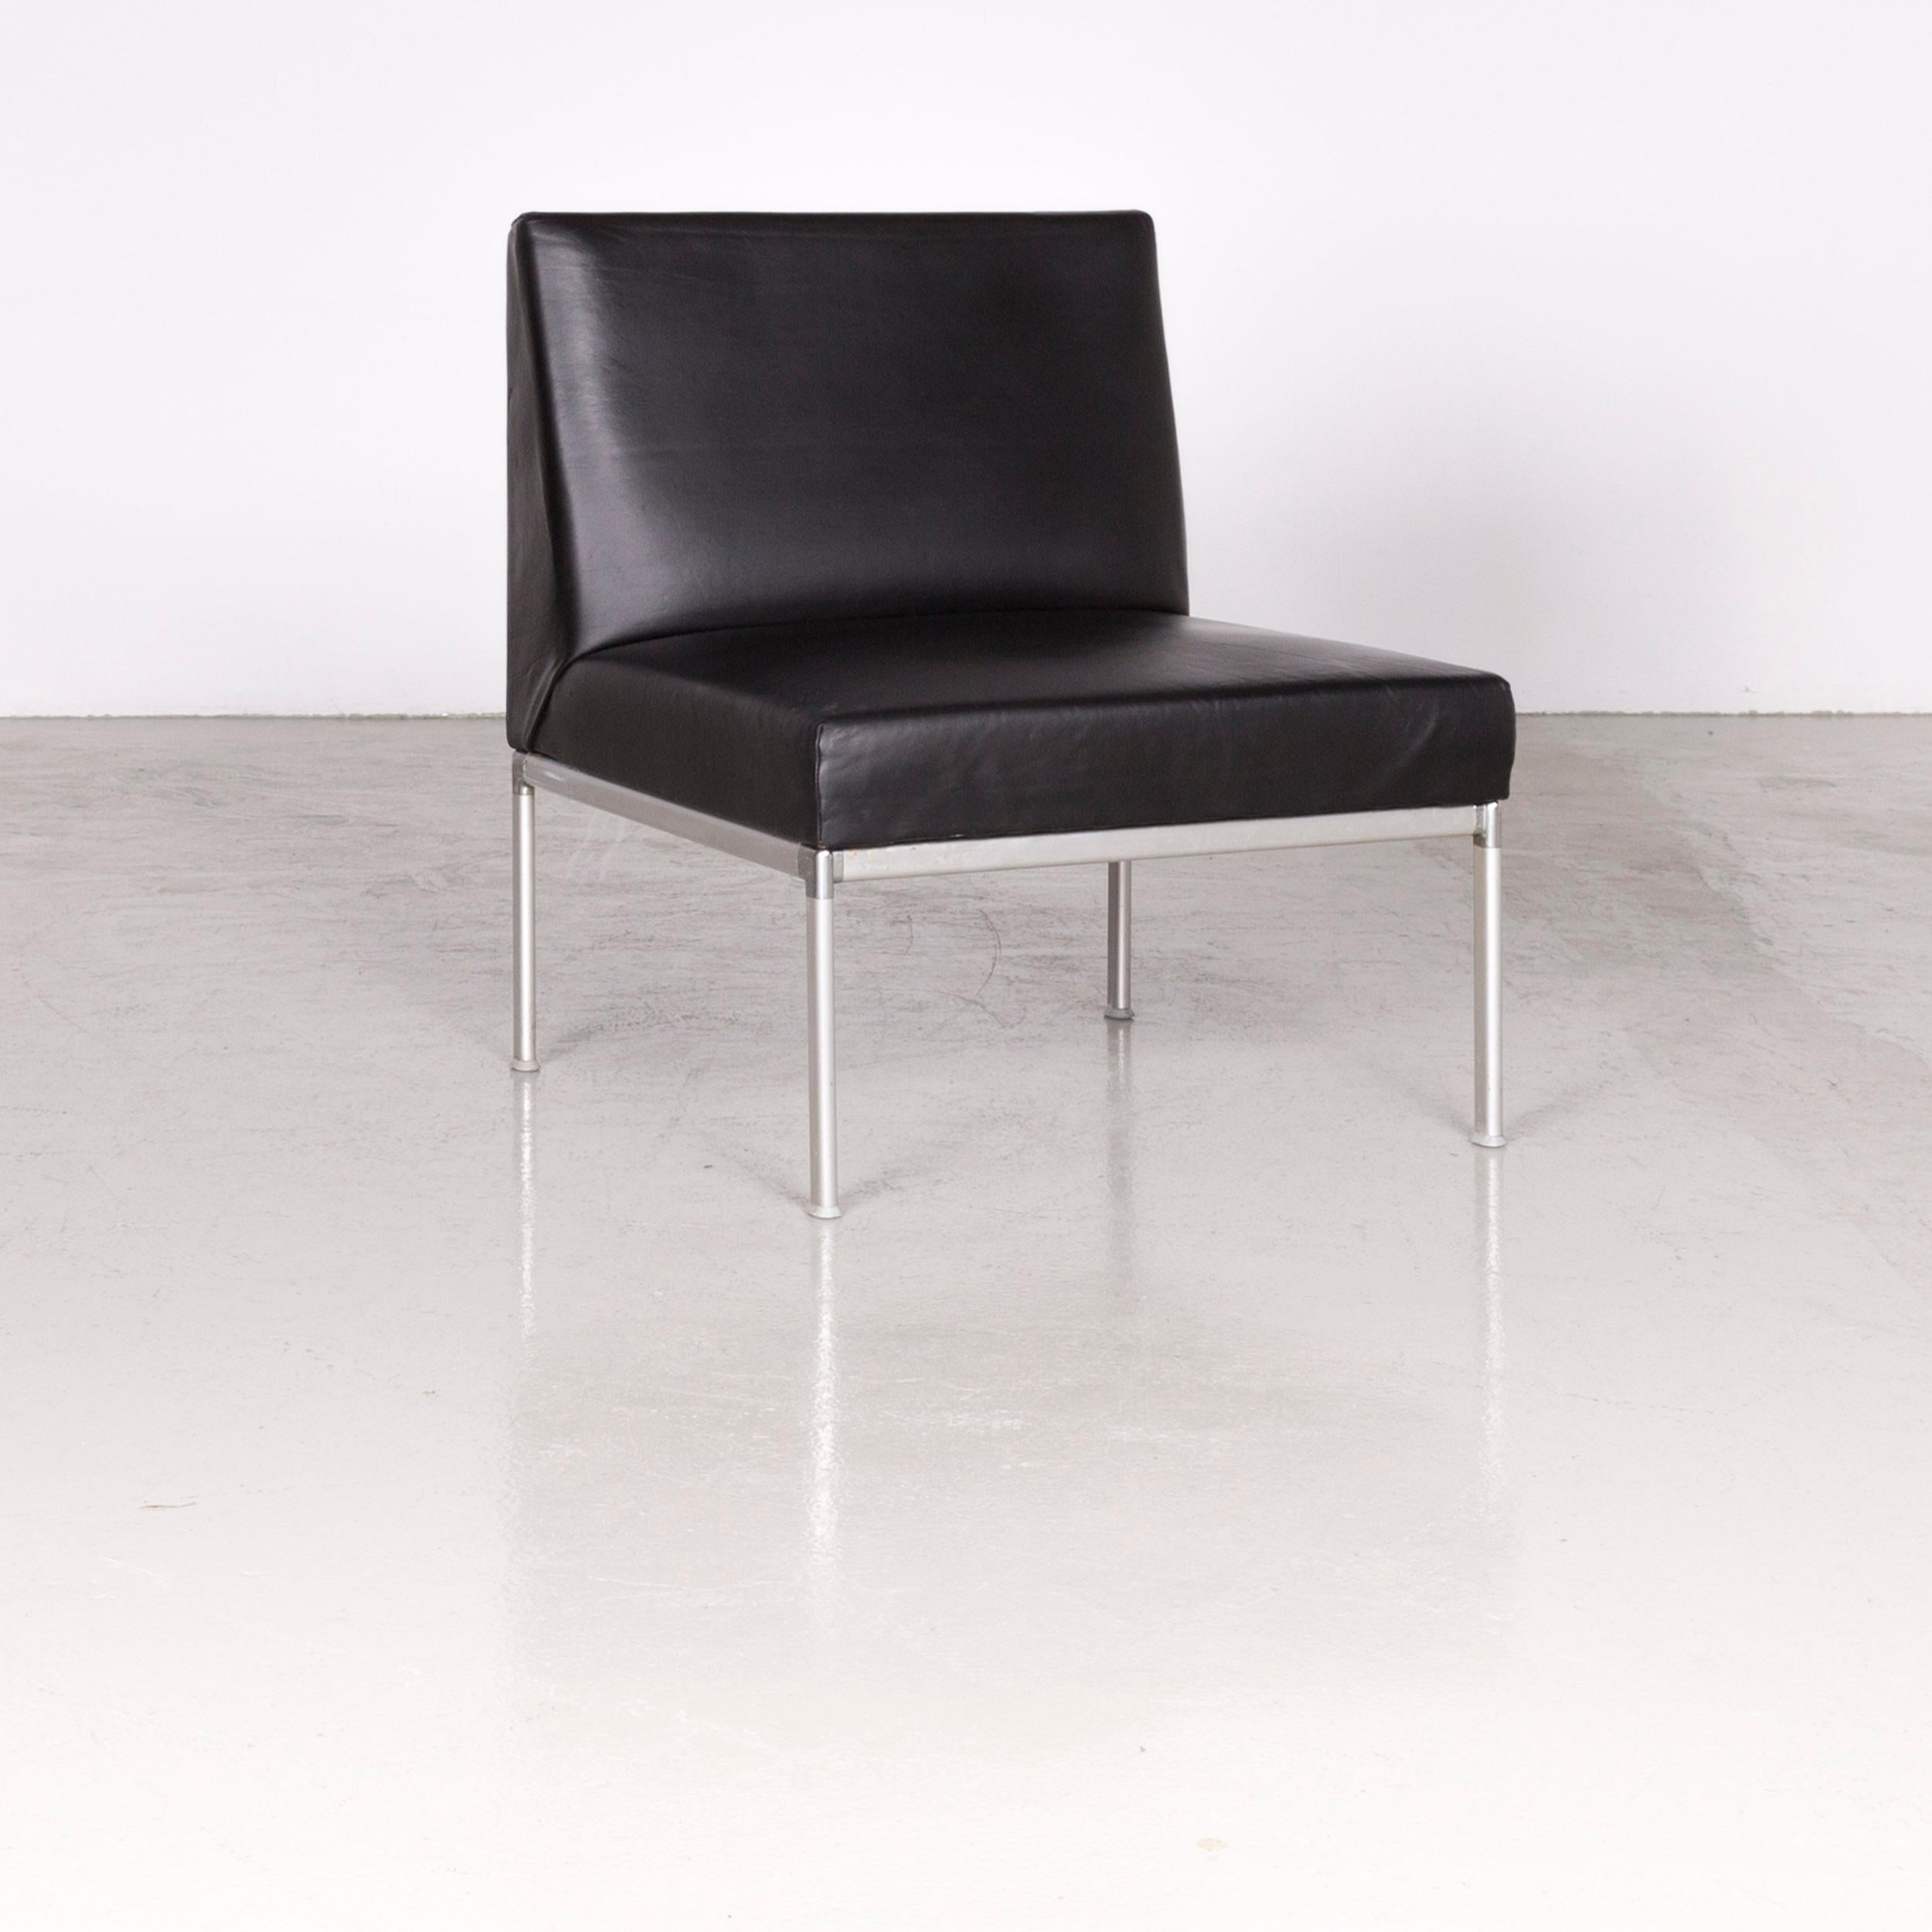 Interlübke designer leather chair set black.